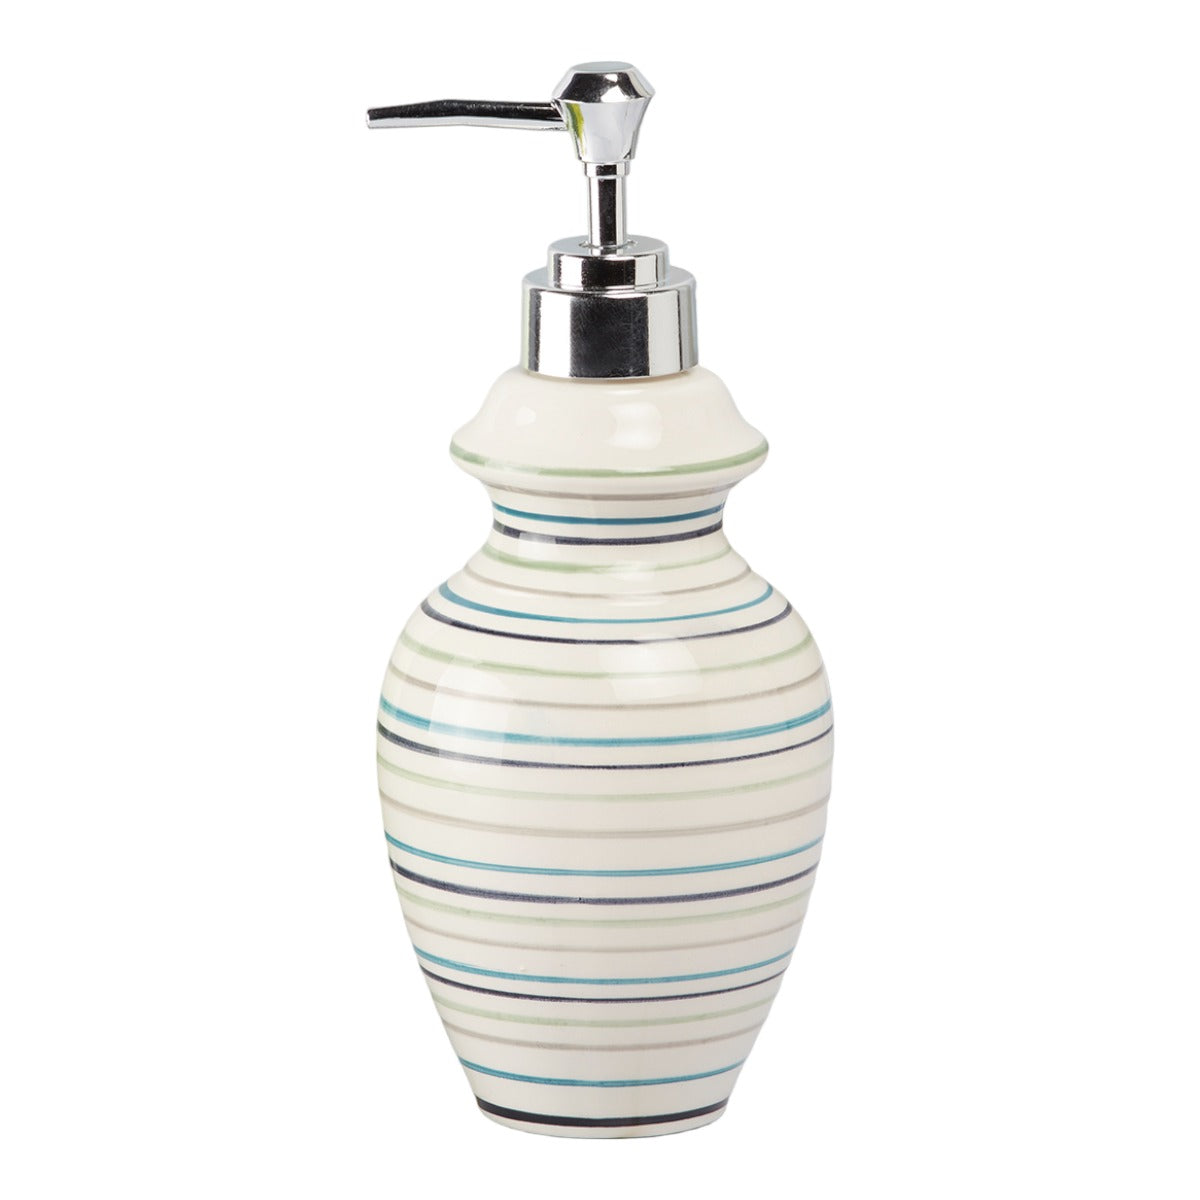 Ceramic Soap Dispenser handwash Pump for Bathroom, Set of 1, White (7641)